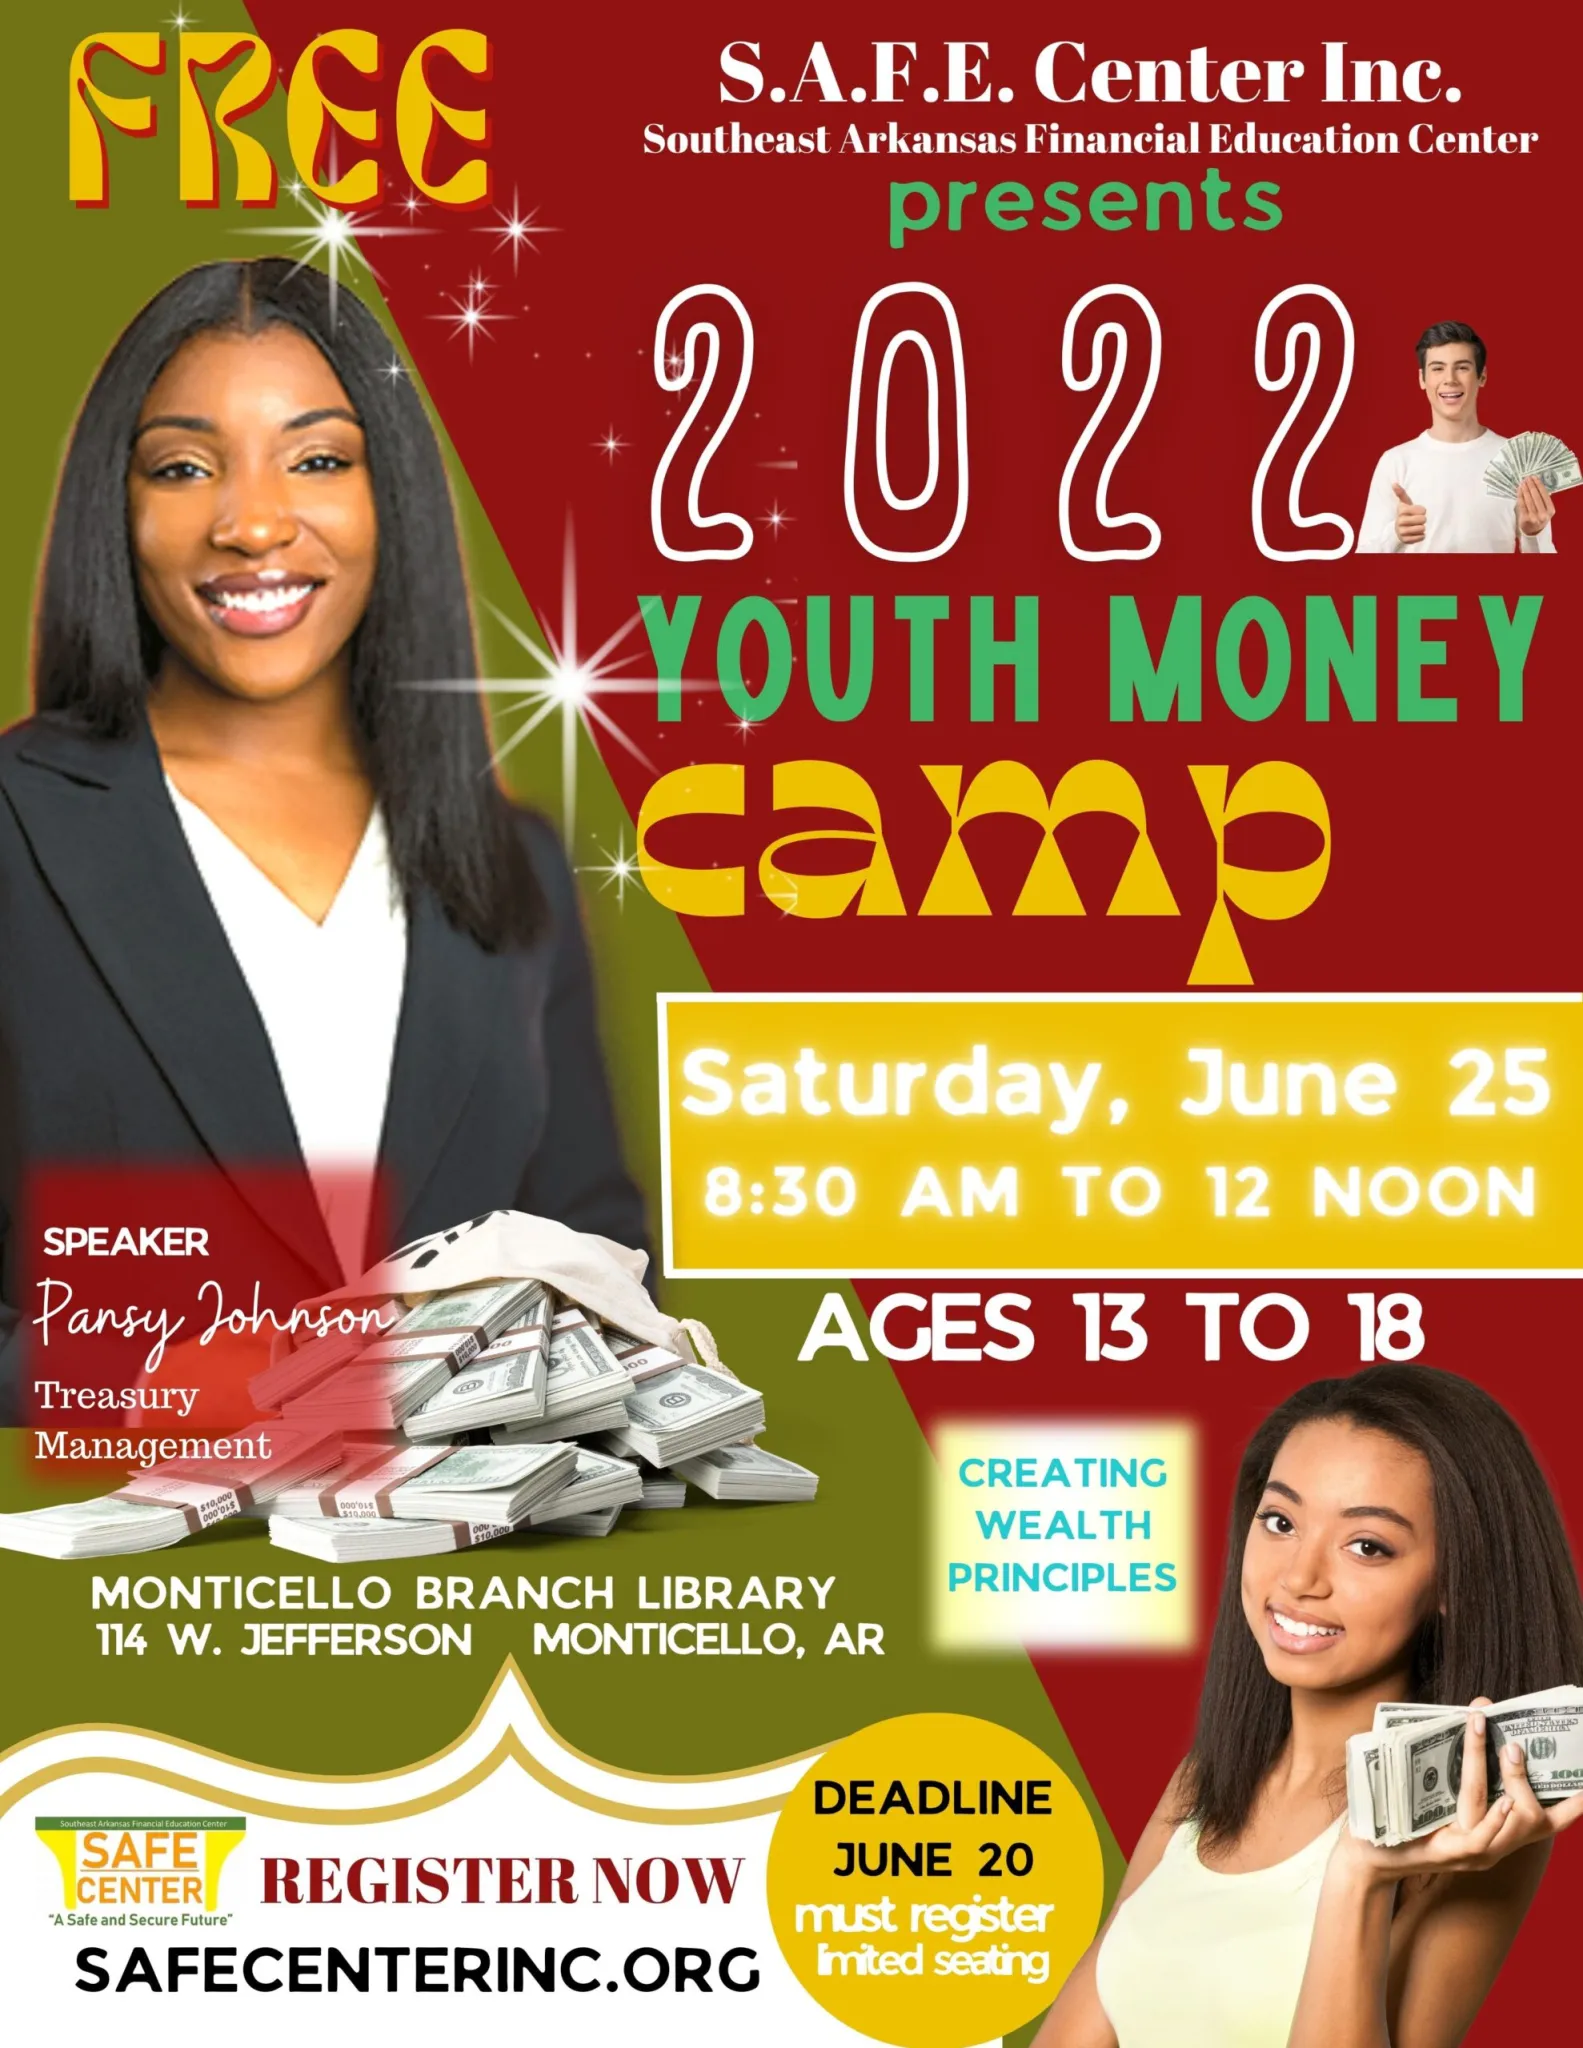 S.A.F.E Center Inc. to host Free Youth Money Camp